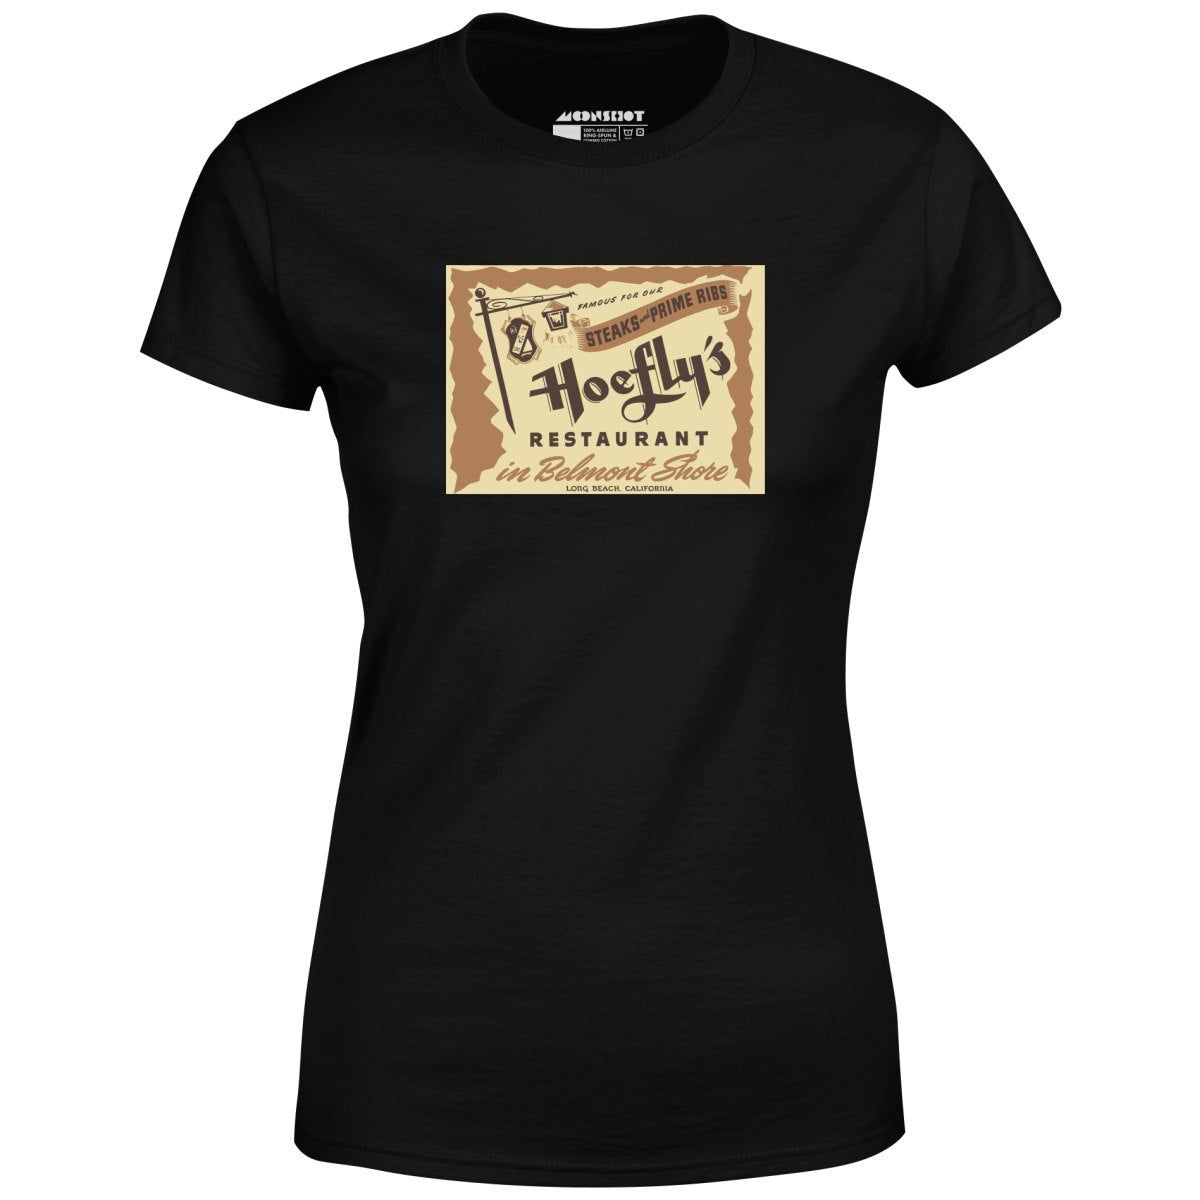 Hoefly's - Belmont Shore, CA - Vintage Restaurant - Women's T-Shirt